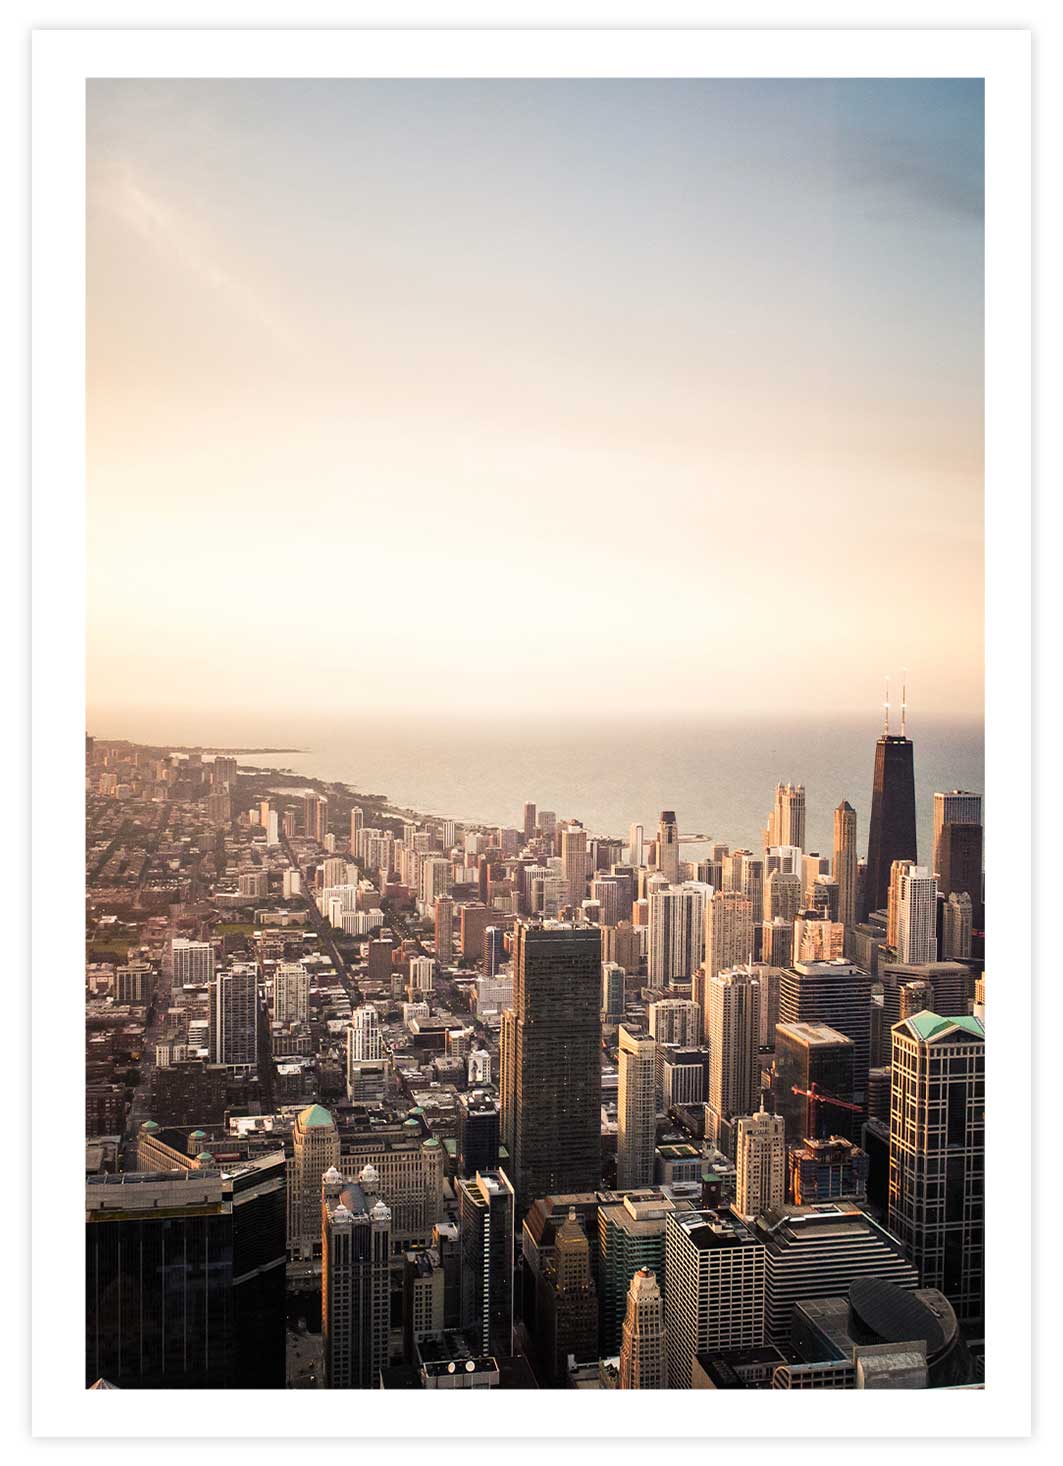 Chicago Skyline Poster